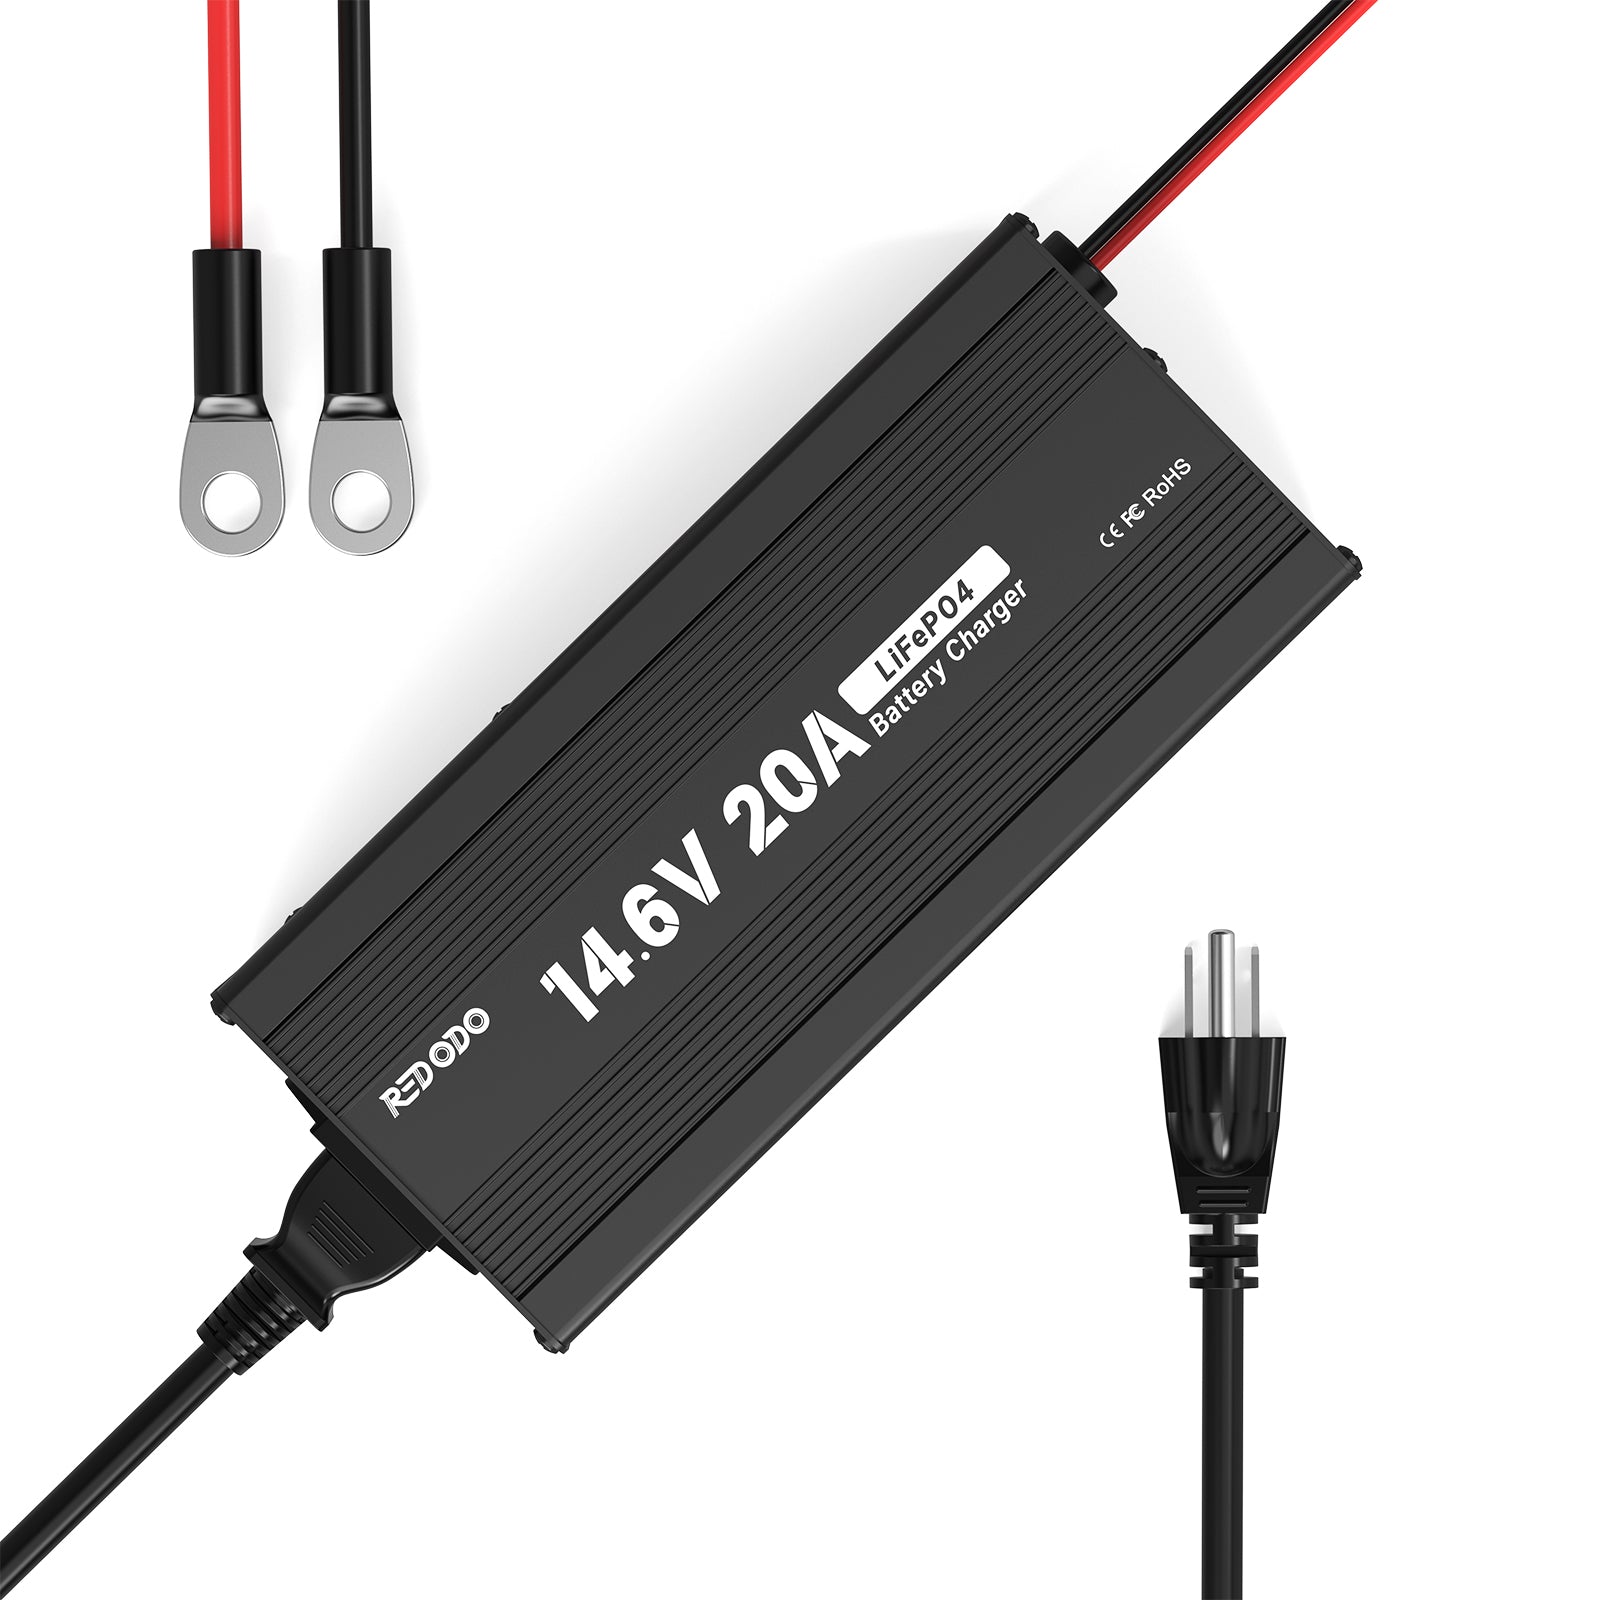 Redodo 14.6V 20A Lifepo4 battery charger